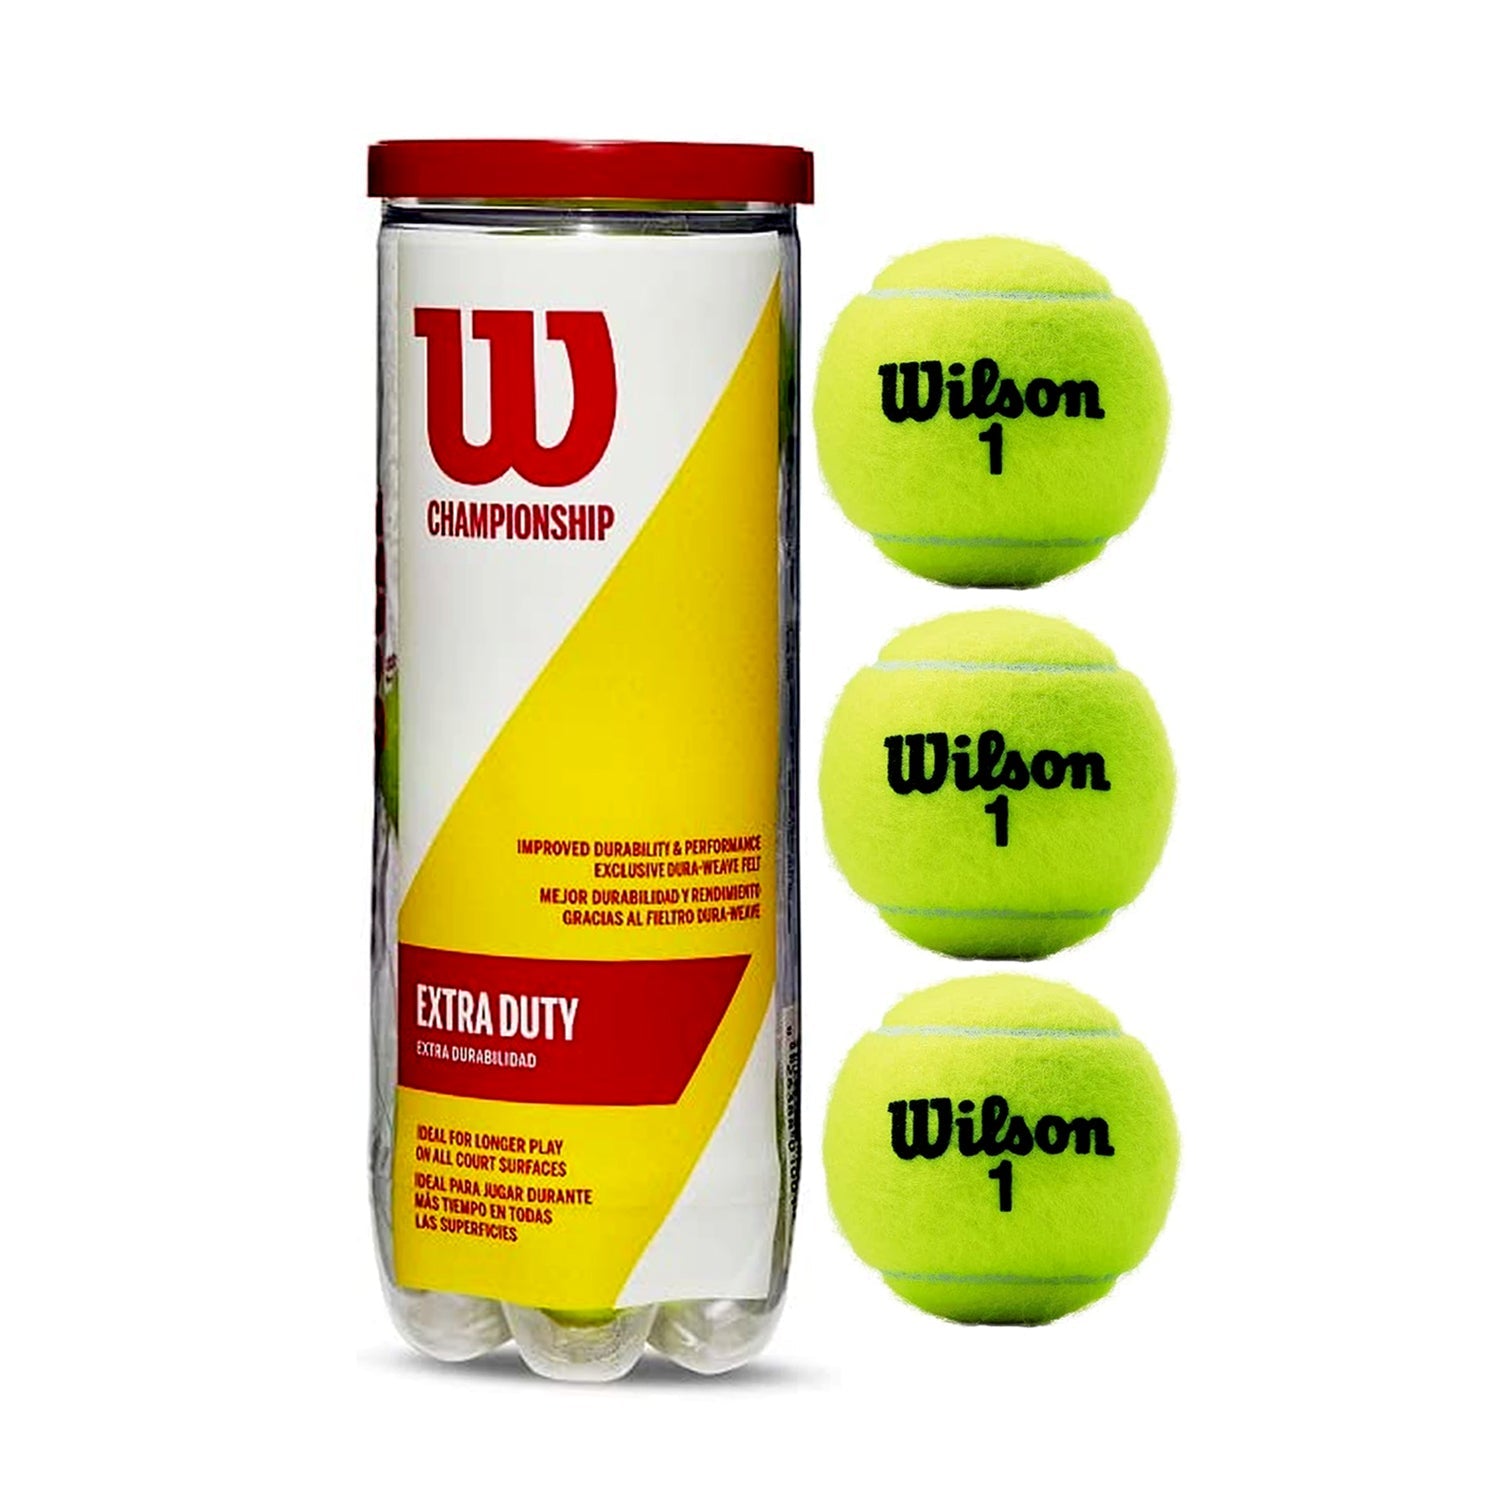 Wilson Championship Extra Duty Tennis Balls Dozen, 4 Cans - Yellow - Best Price online Prokicksports.com